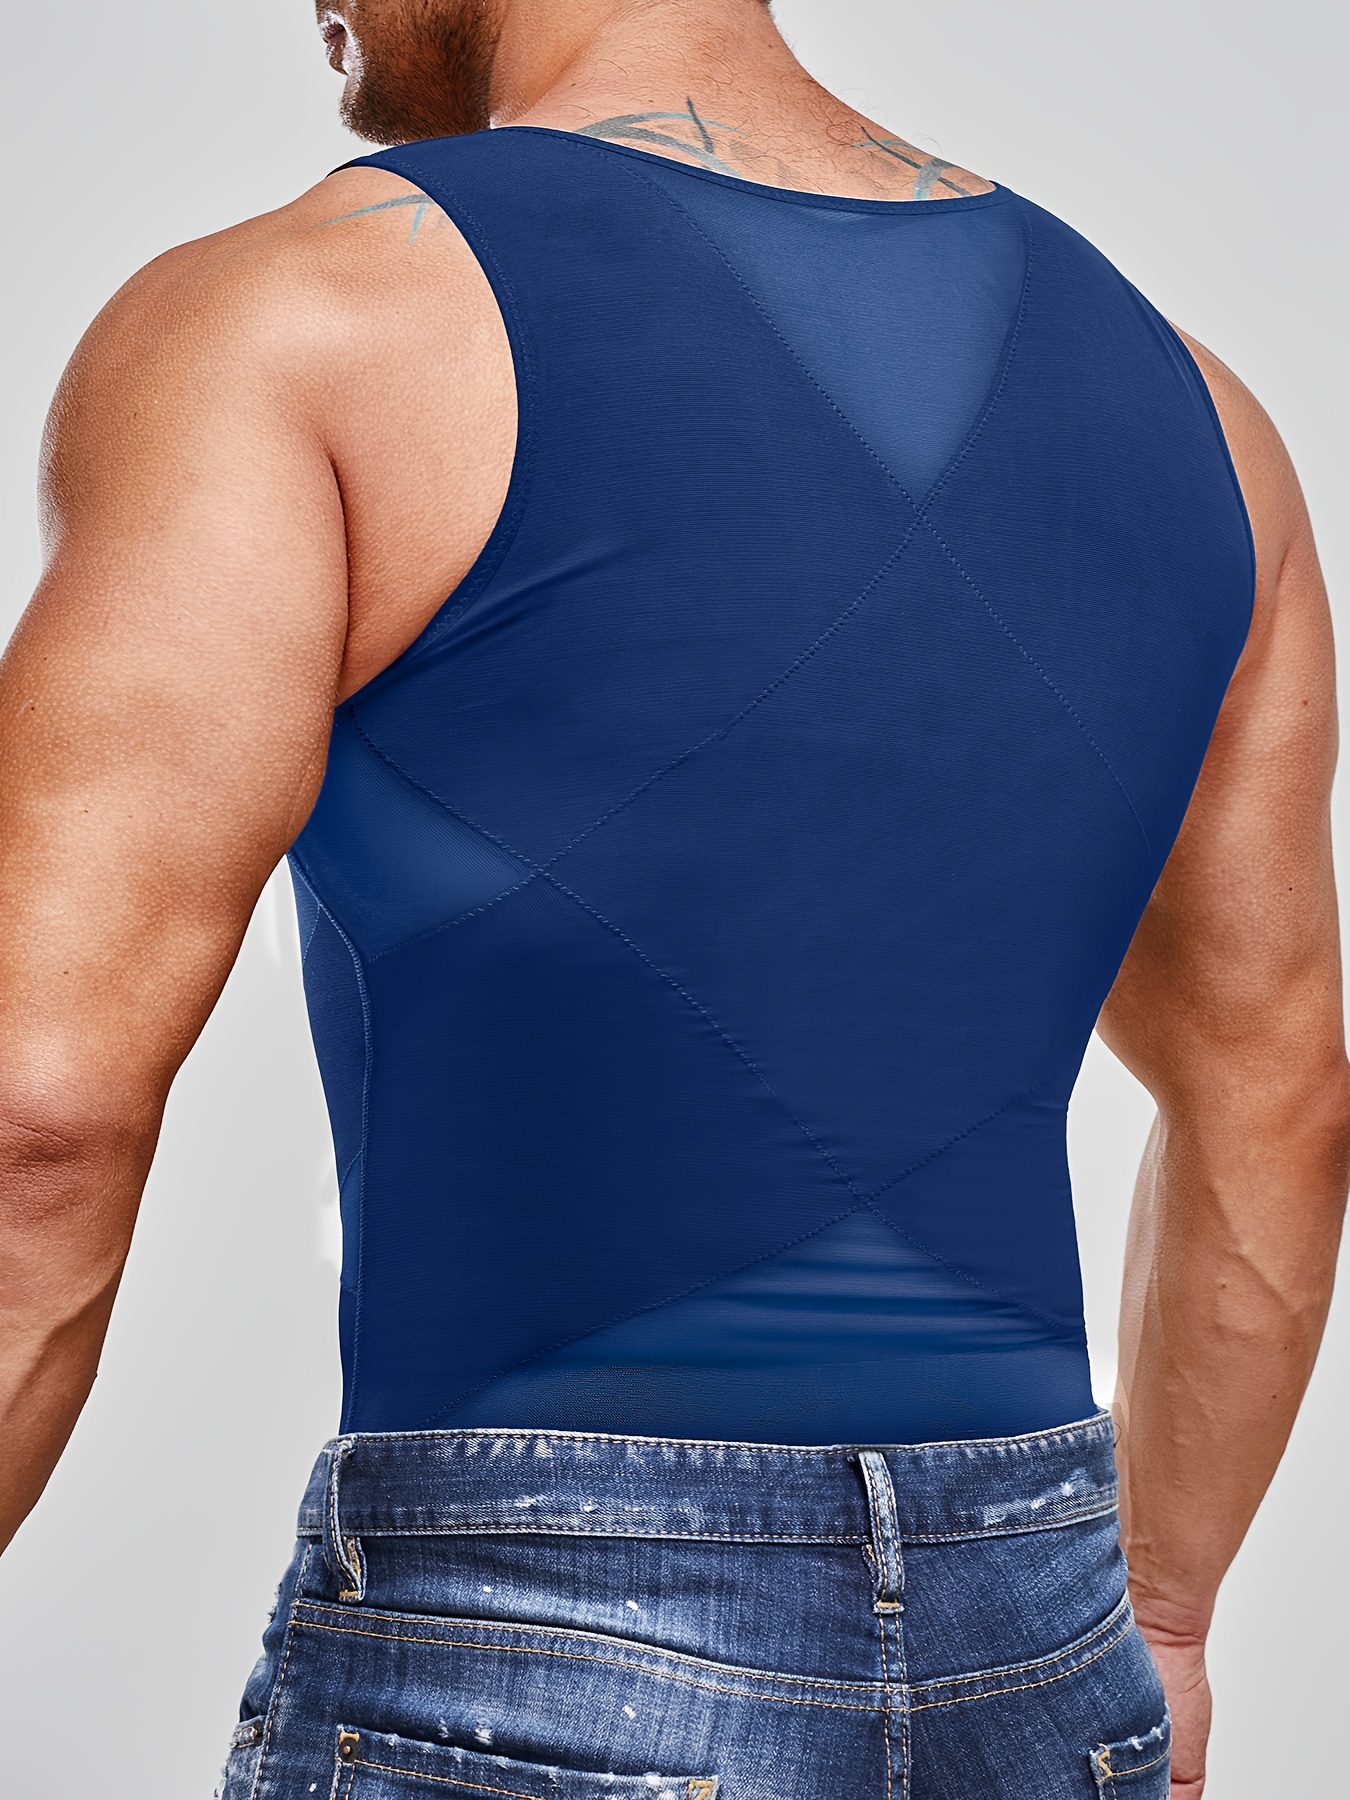 Buy Irisnaya Mens Compression Shirt Slimming Body Shaper Vest Waist Trainer  Workout Tank Tops Back Support Undershirts at